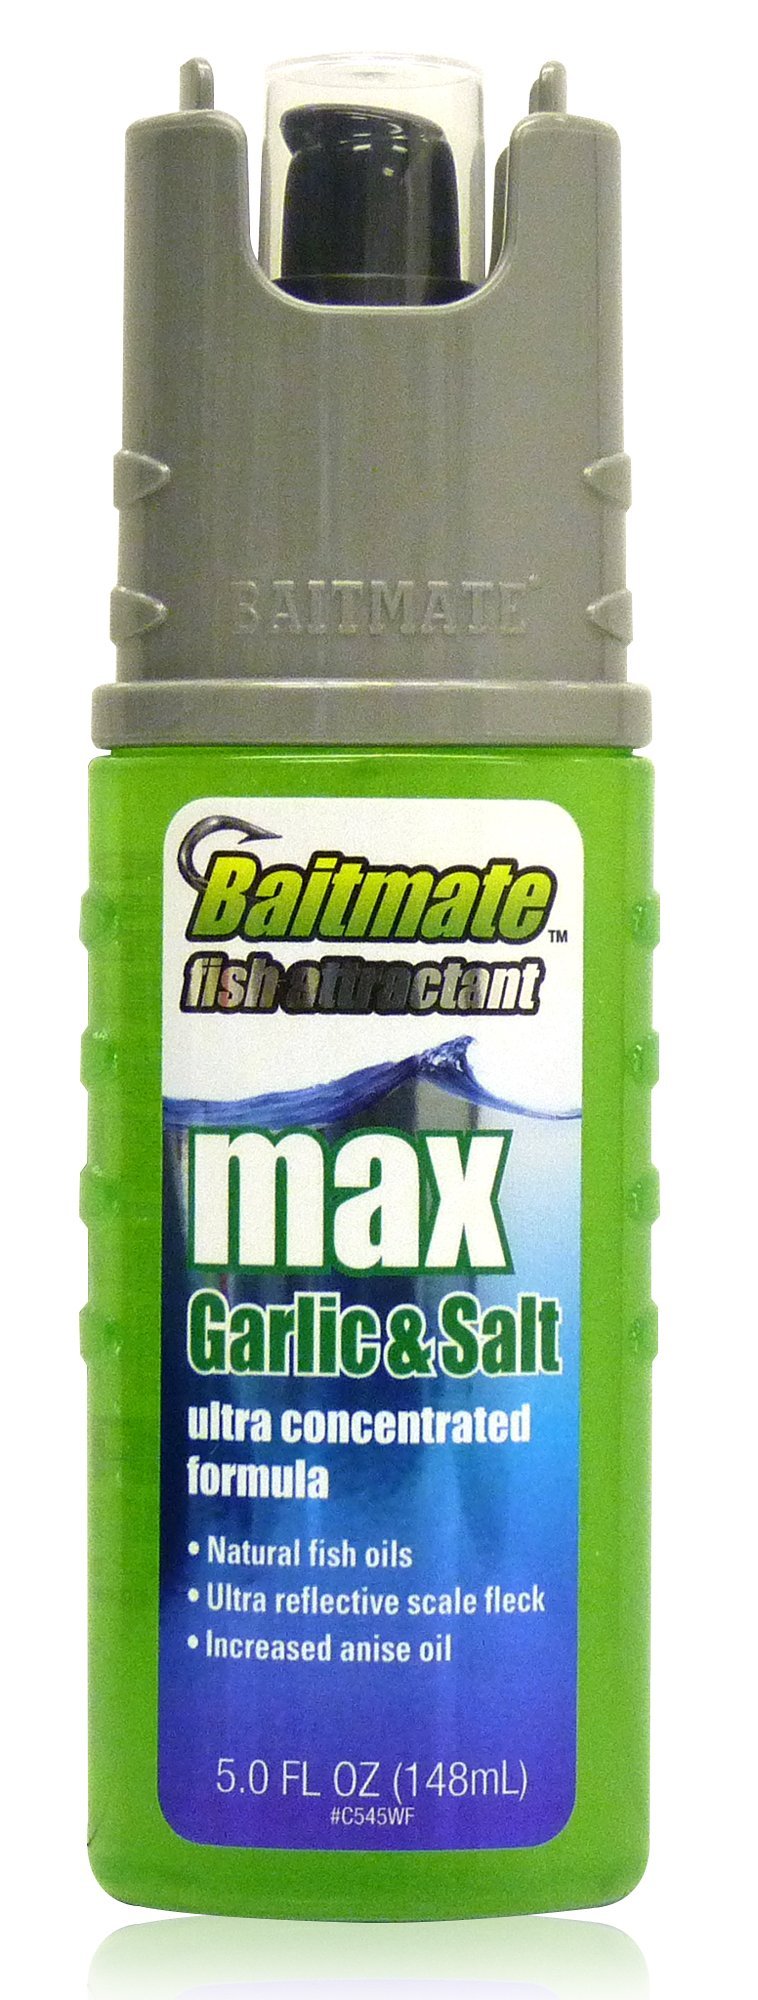 [AUSTRALIA] - Baitmate Max Scent Fish Attractant, for Lures and Baits - 5 fl oz. Garlic & Salt 